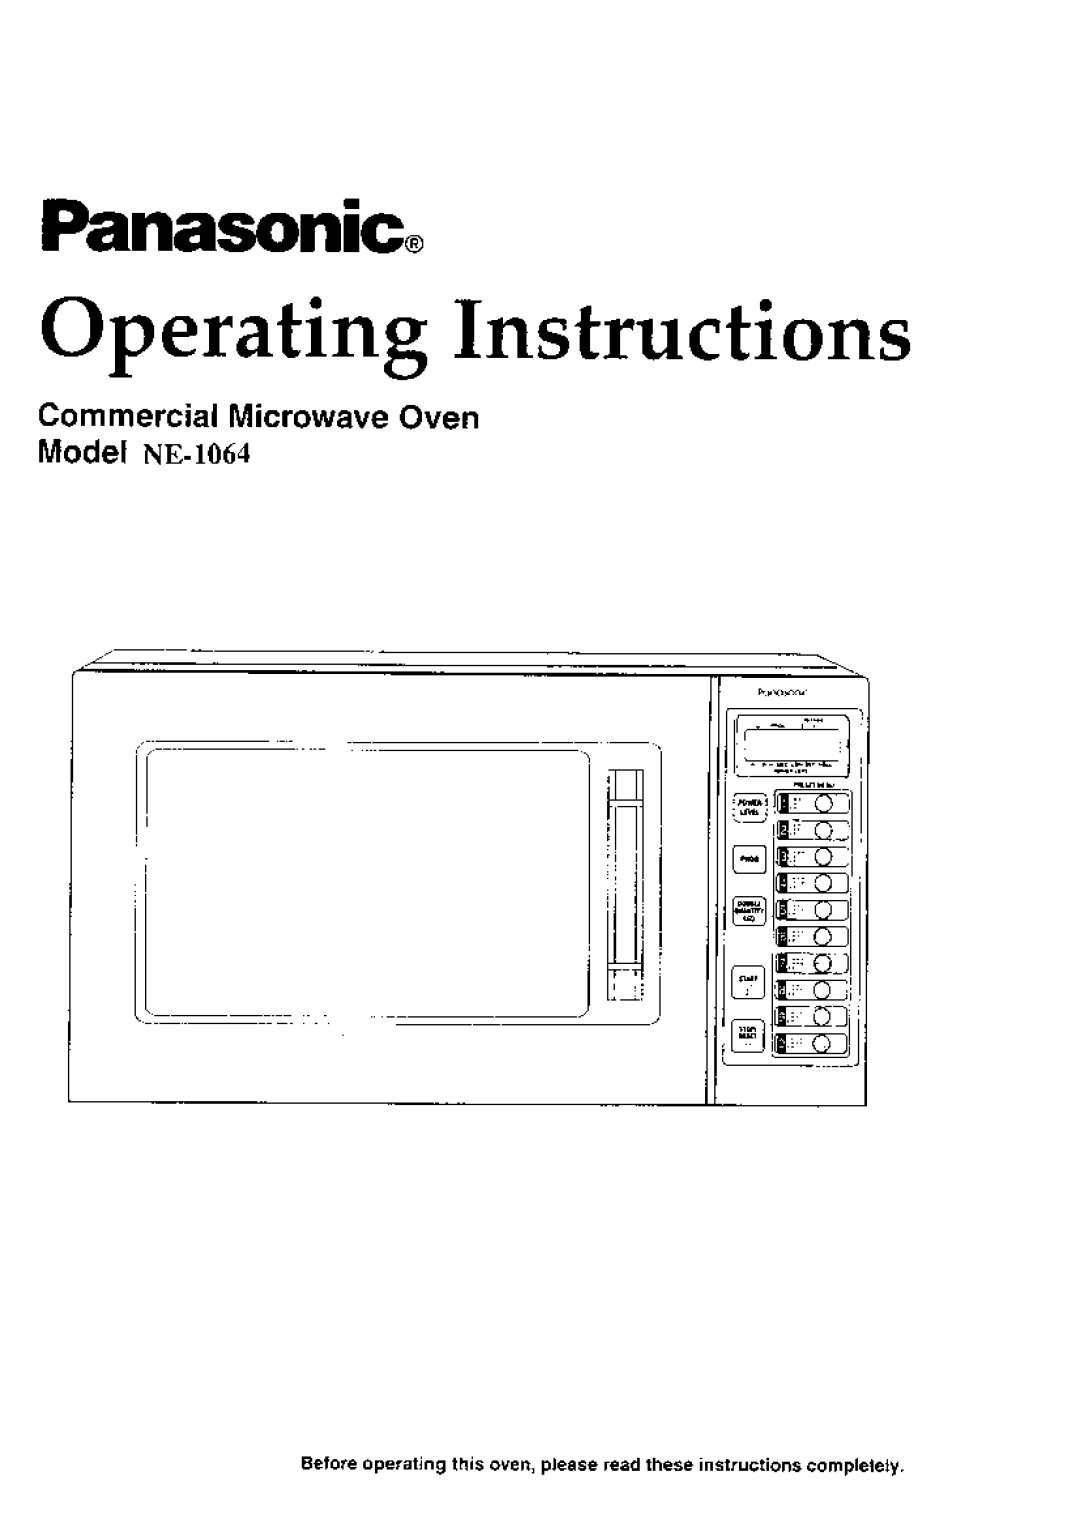 Panasonic manual CommercialMicrowaveOven, t l, Model NE-1064, f l--il, L::J, OperatingInstructions, Panasonic, t_i_J 